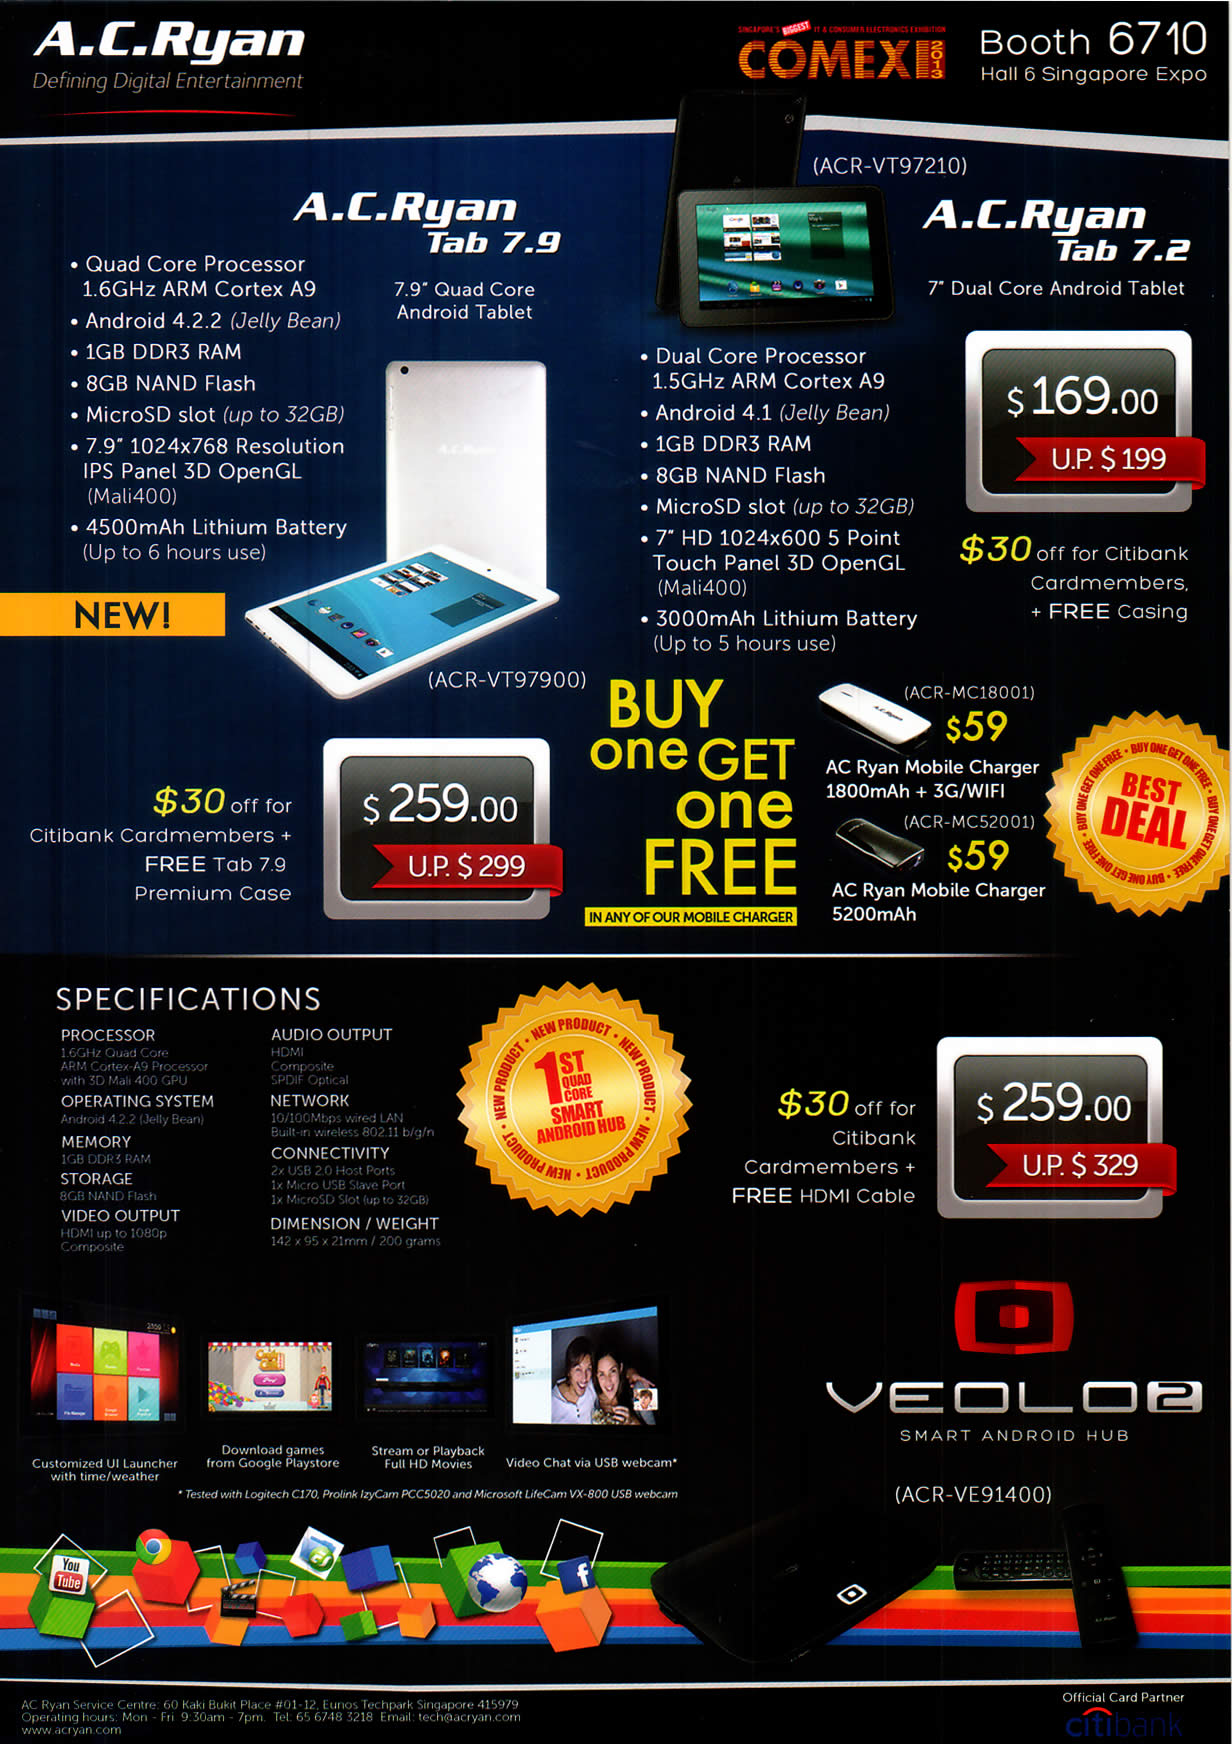 COMEX 2013 price list image brochure of AC Ryan Tablets Tab 7.9 ACR-VT97900, Tab 7.2 ACR-VT97210, Veolo2 Smart Android Hub ACR-VE91400